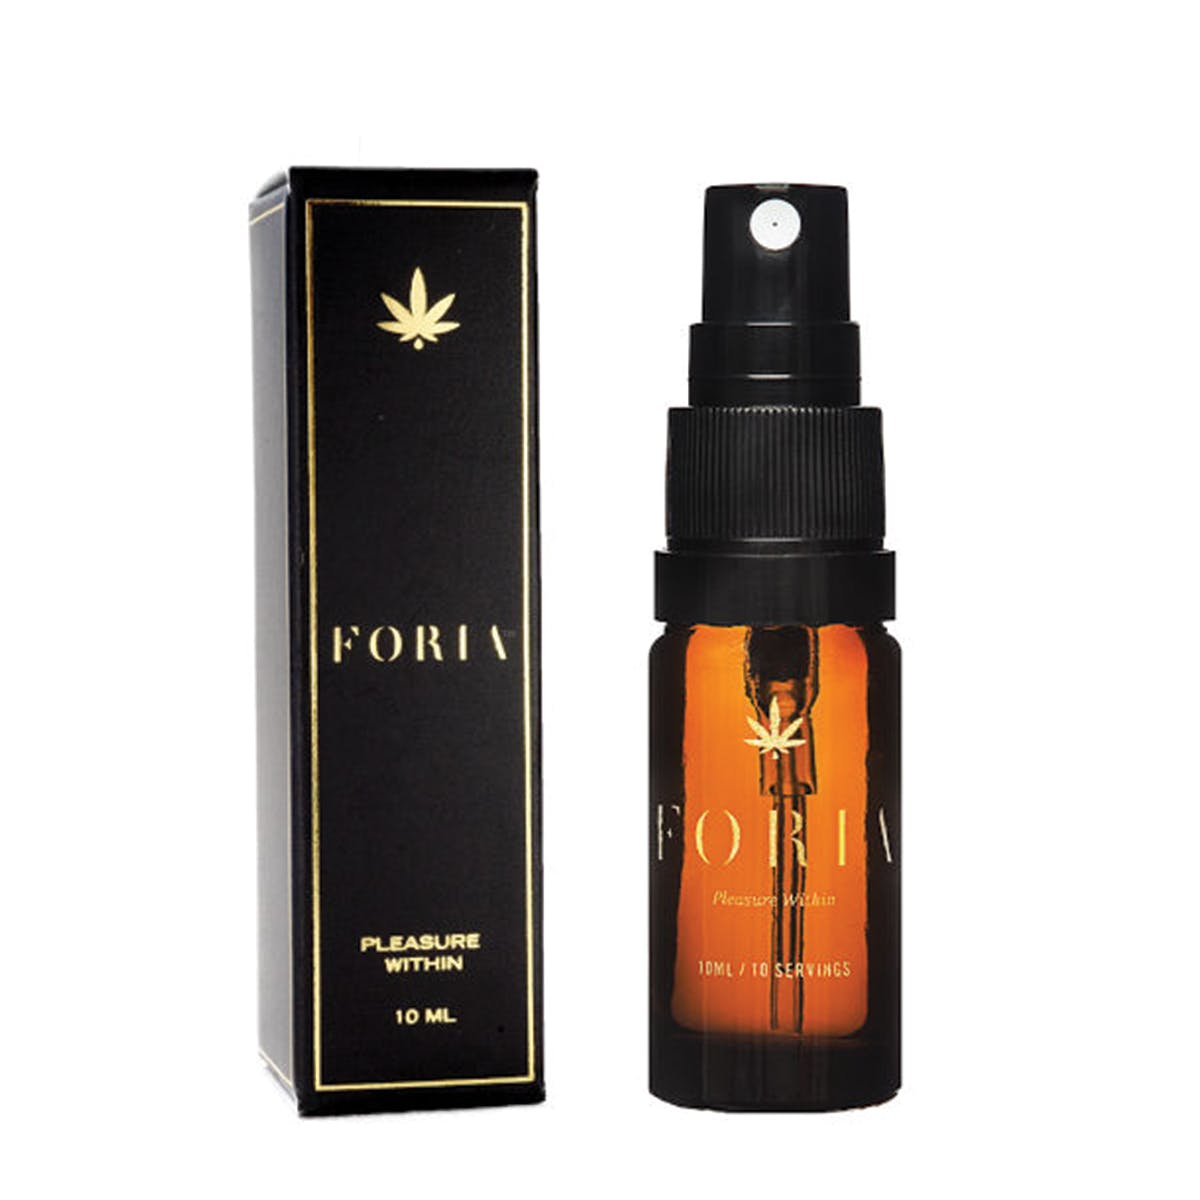 marijuana-dispensaries-green-goddess-collective-in-venice-foria-pleasure-10ml-spray-bottle